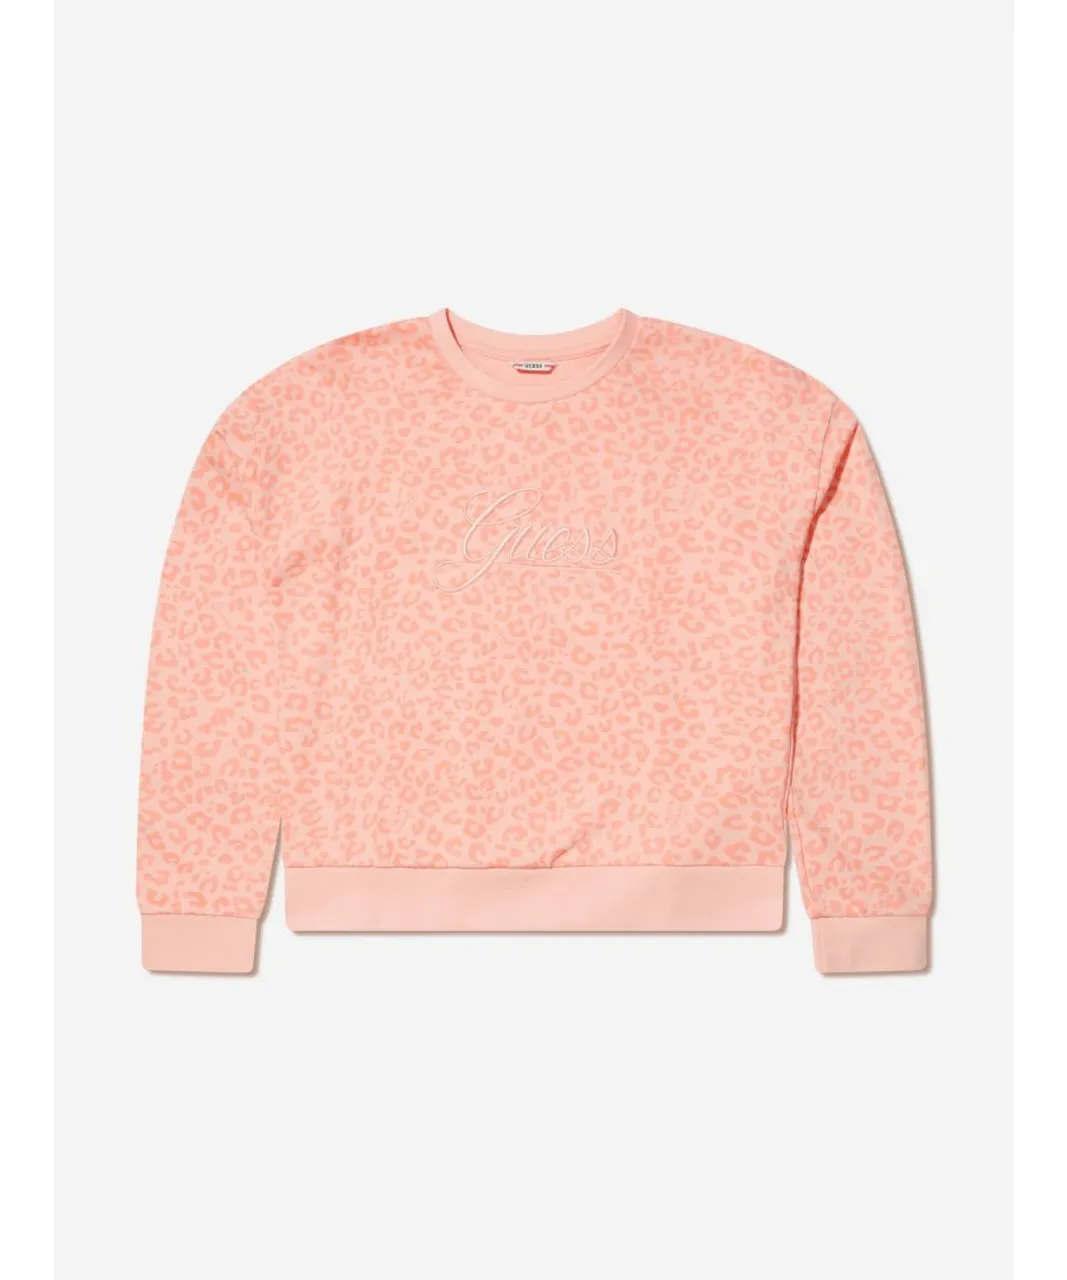 Guess Girls Leopard Print Sweatshirt - Pink